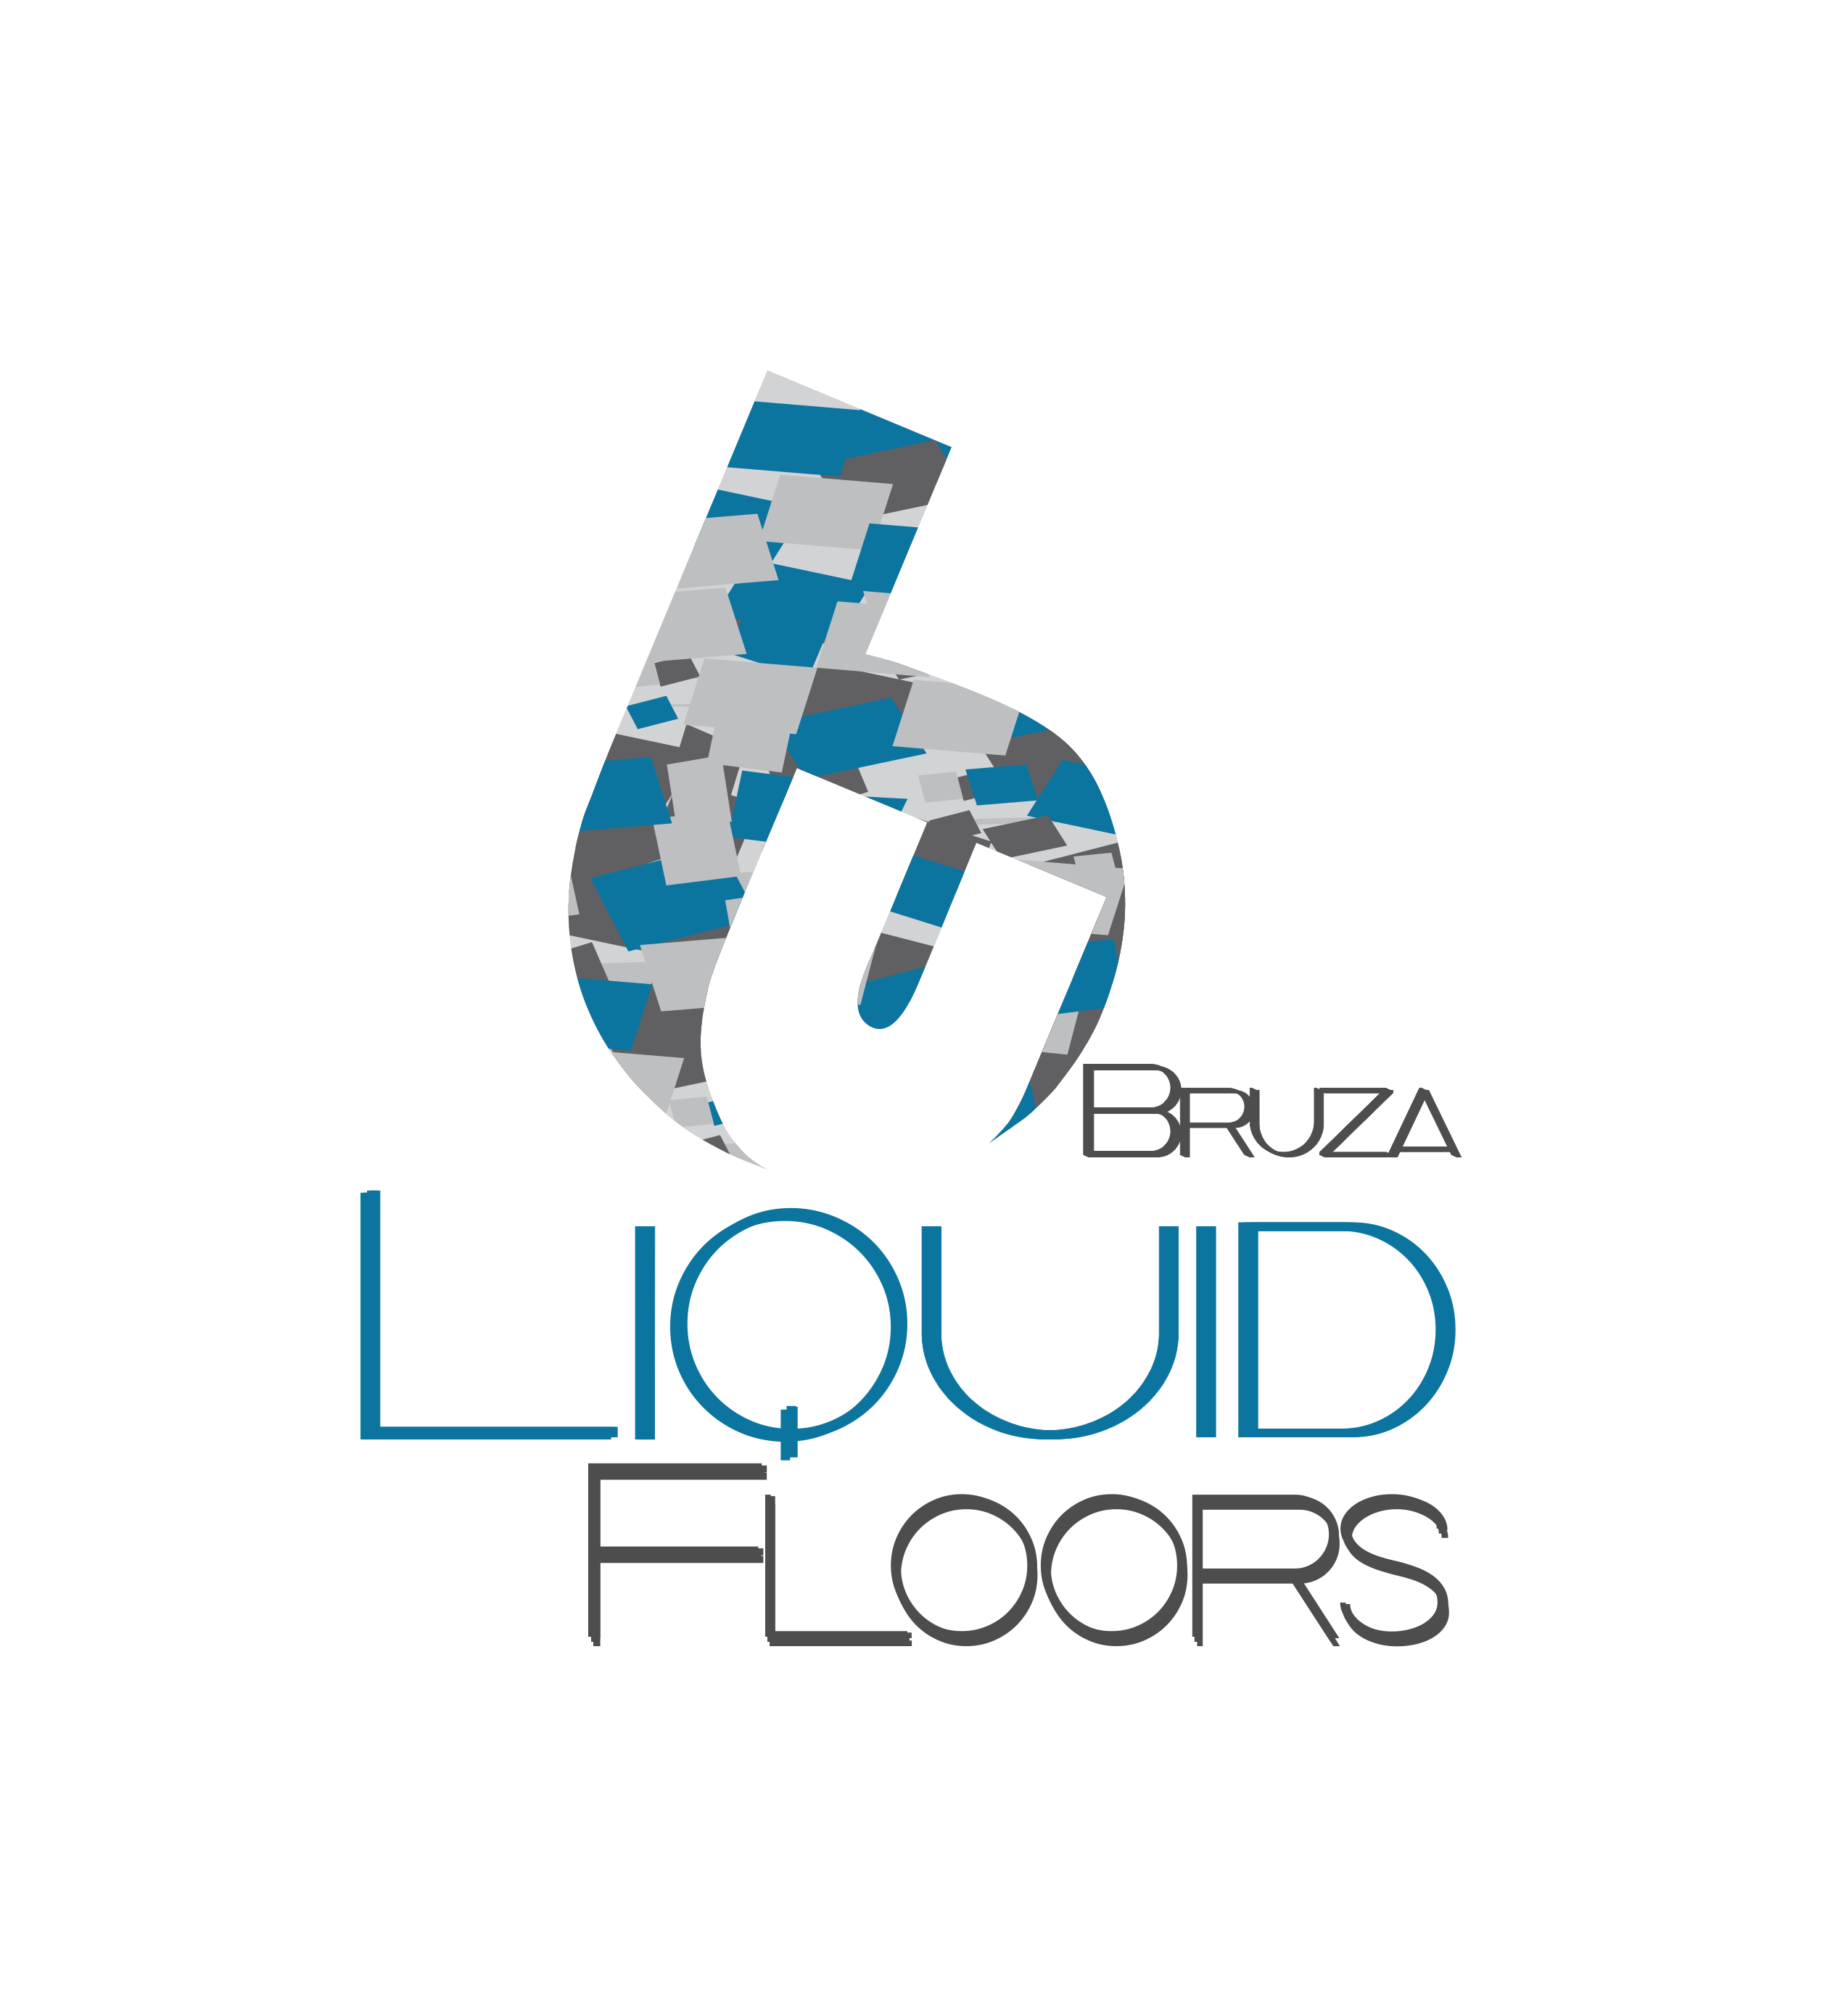 Bruza Liquid Floors Logo